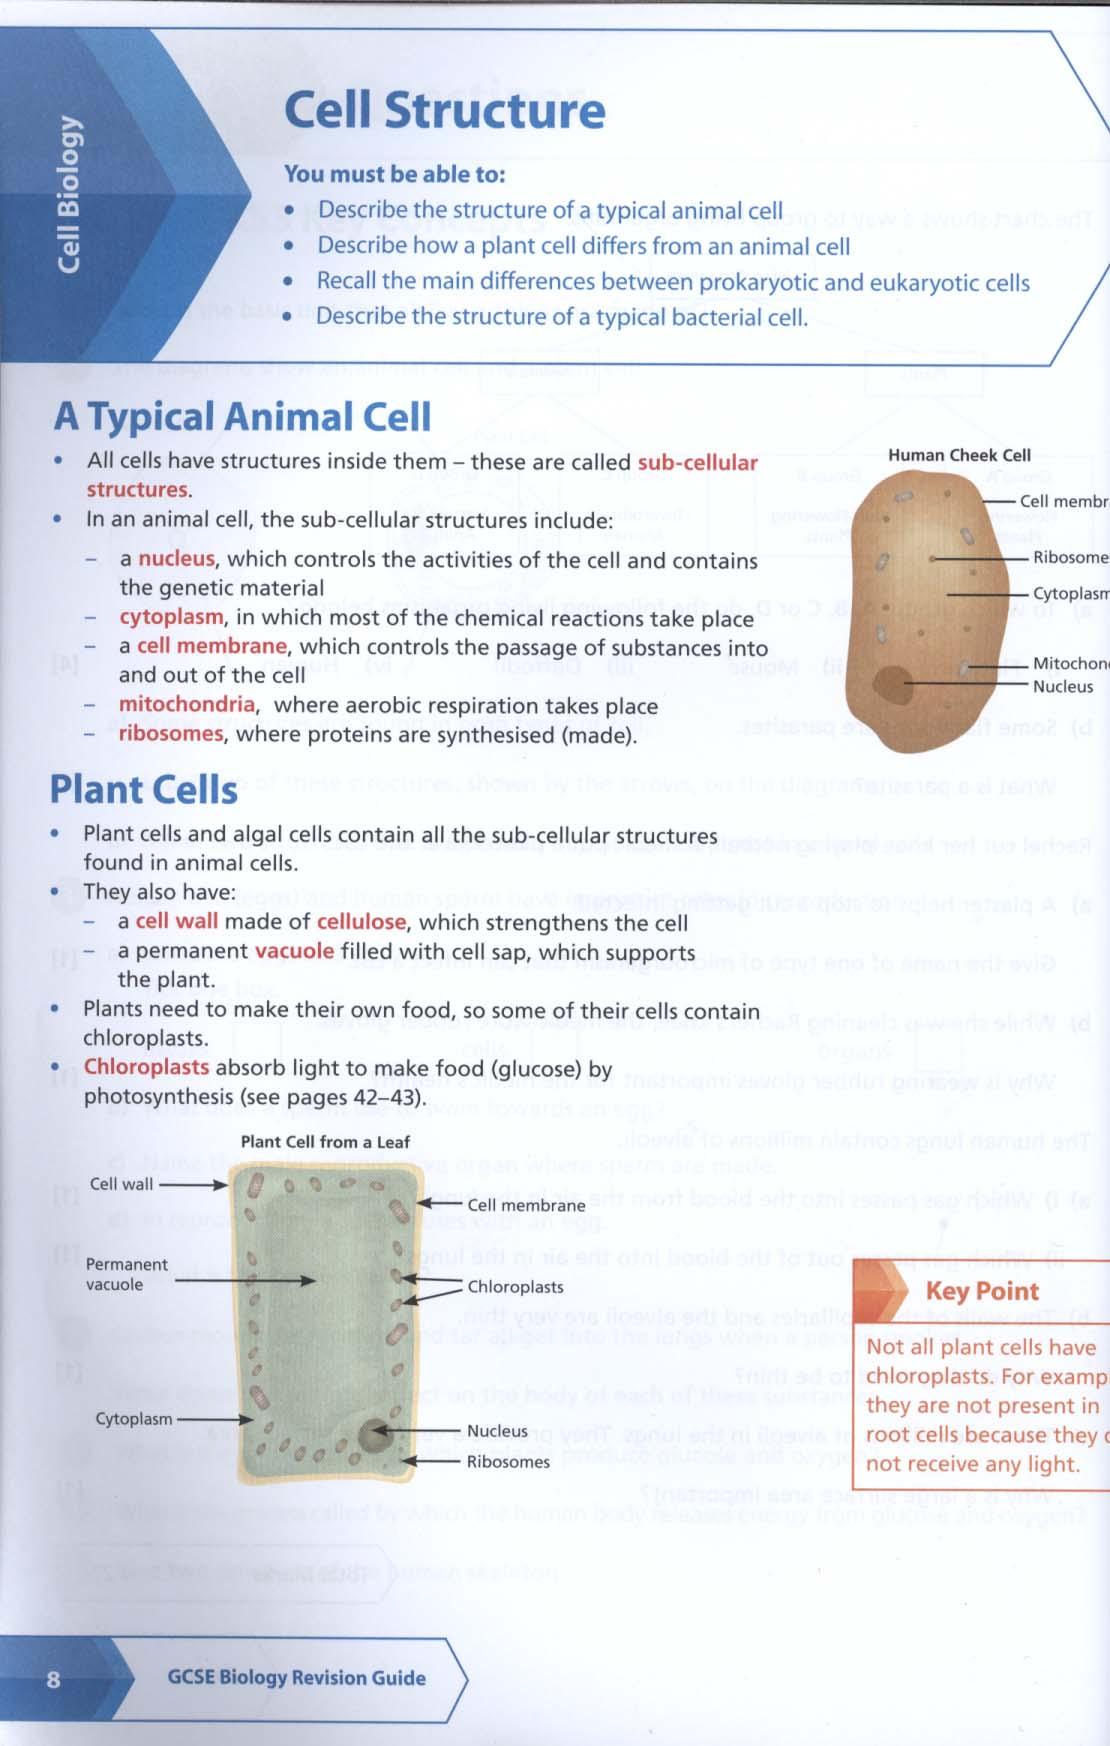 AQA GCSE Biology Revision Guide